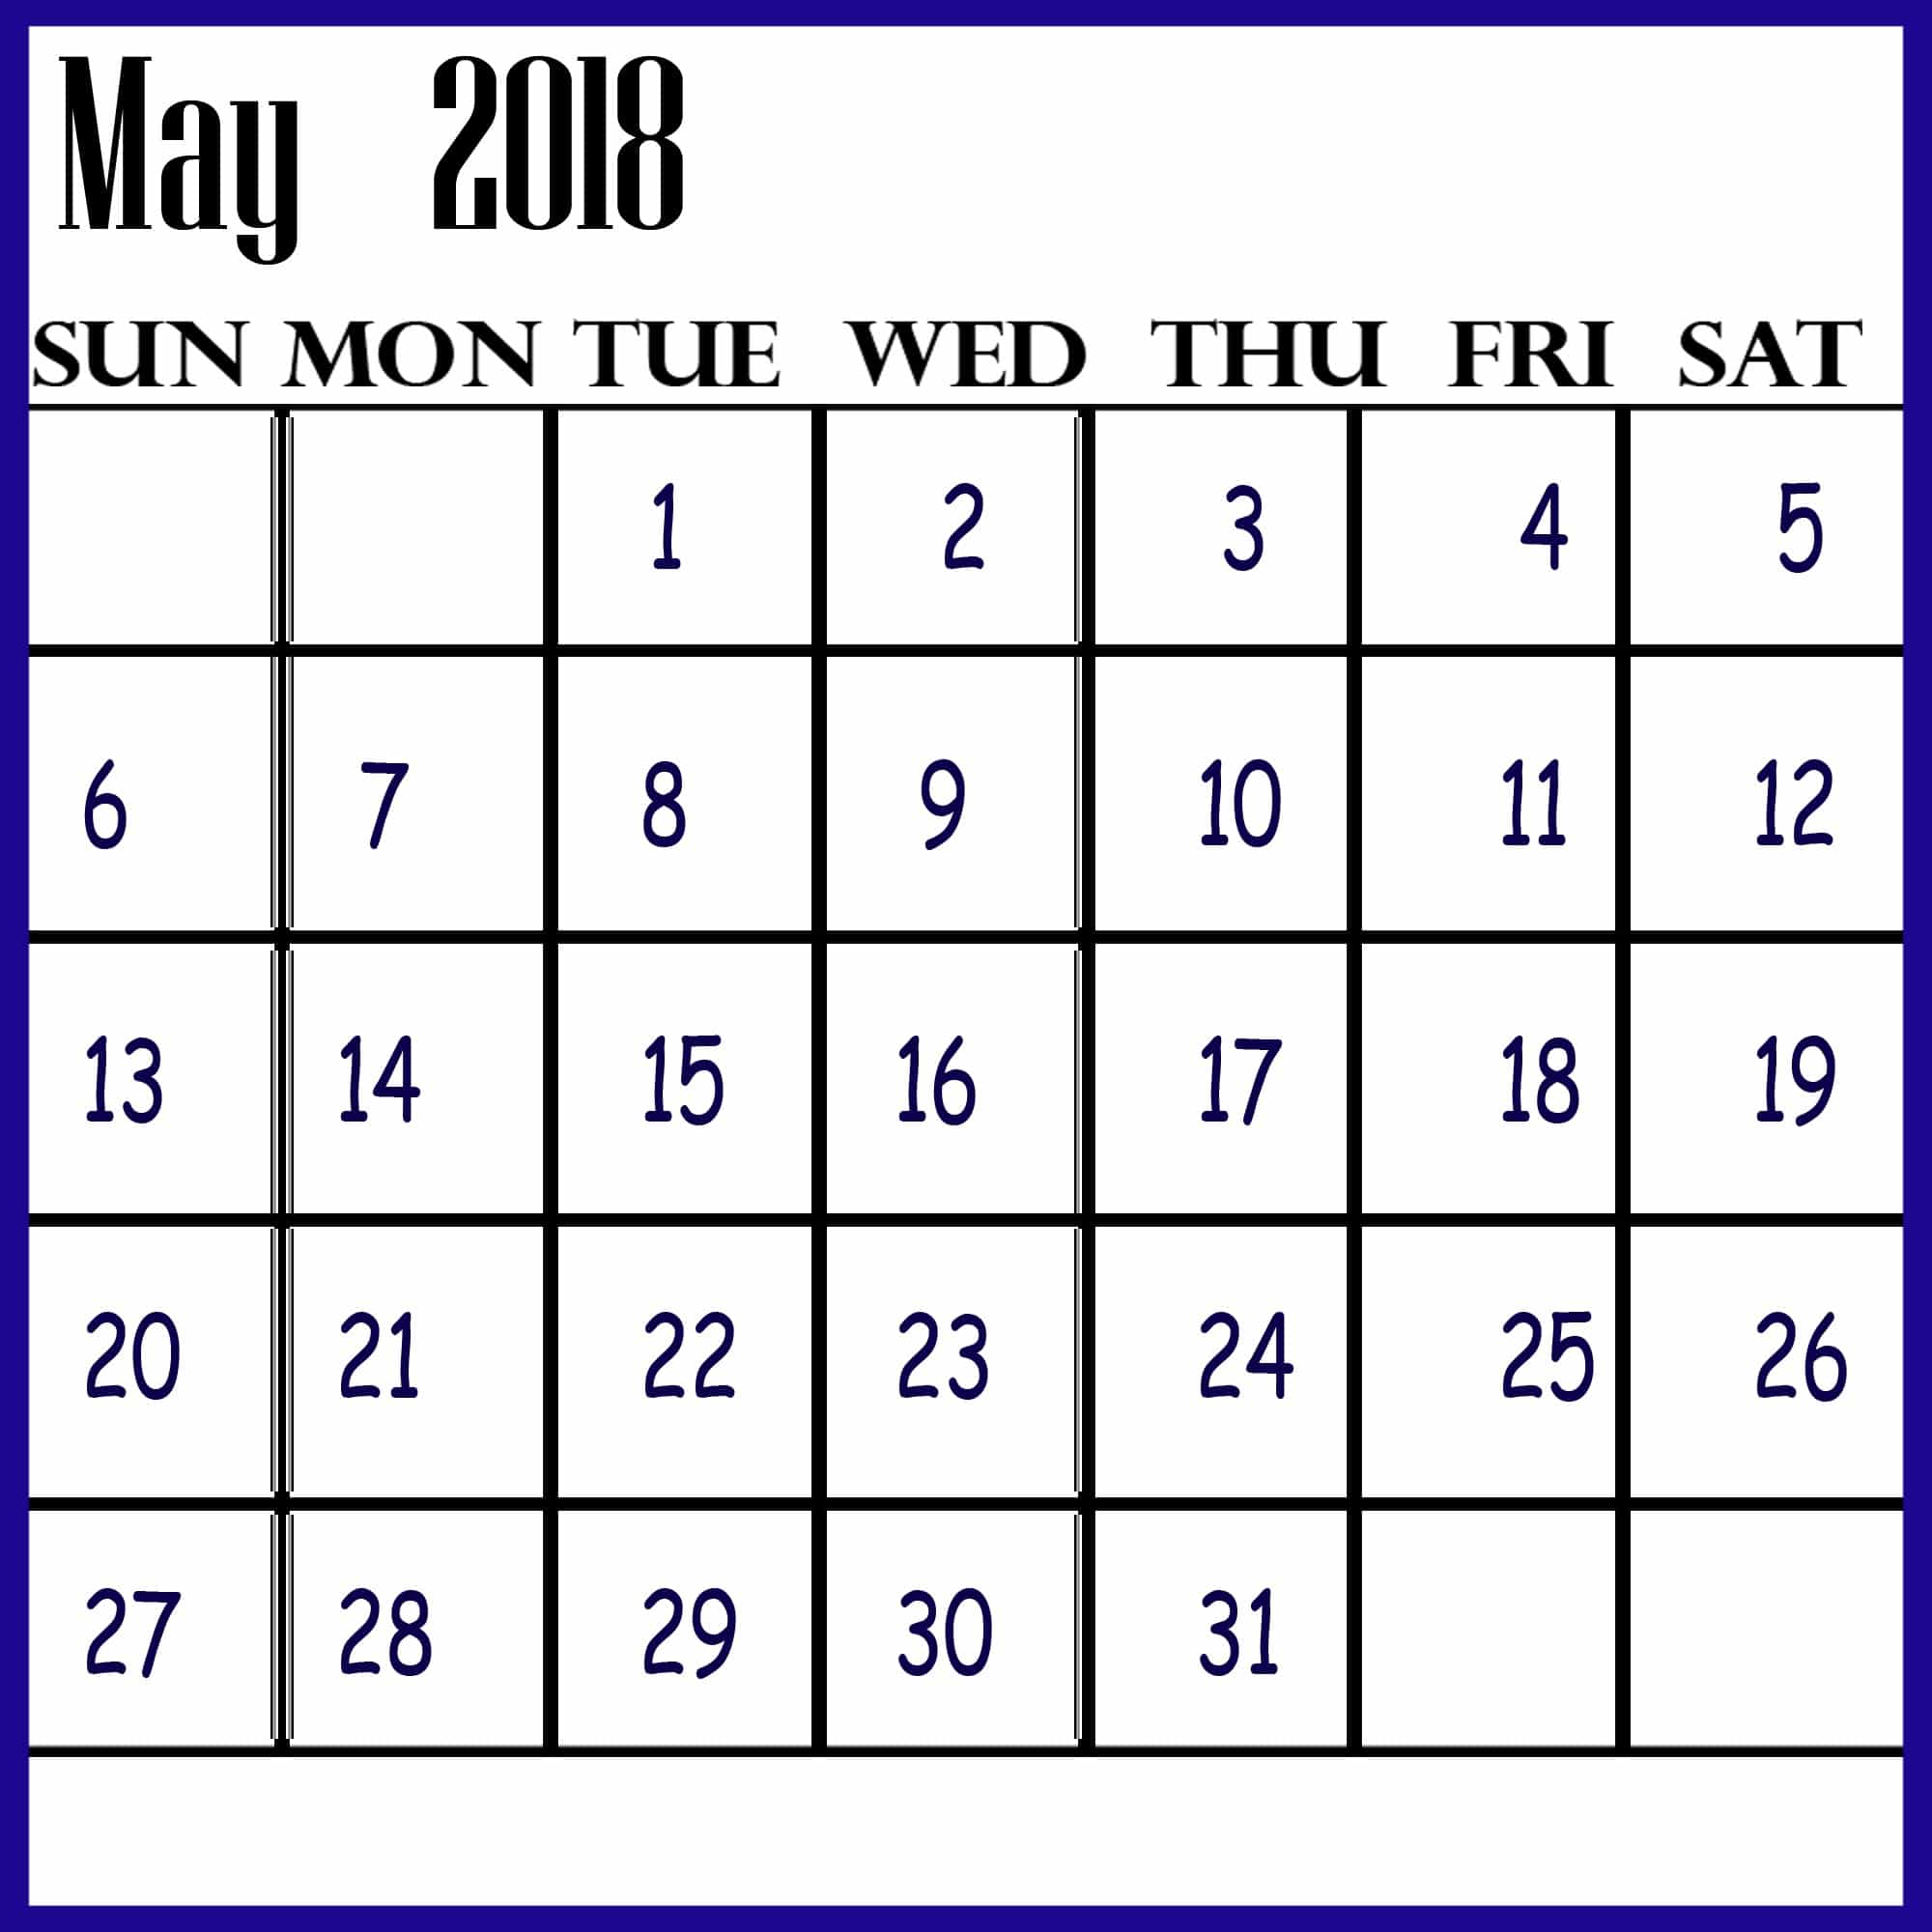 May 2018 Printable Calendar 